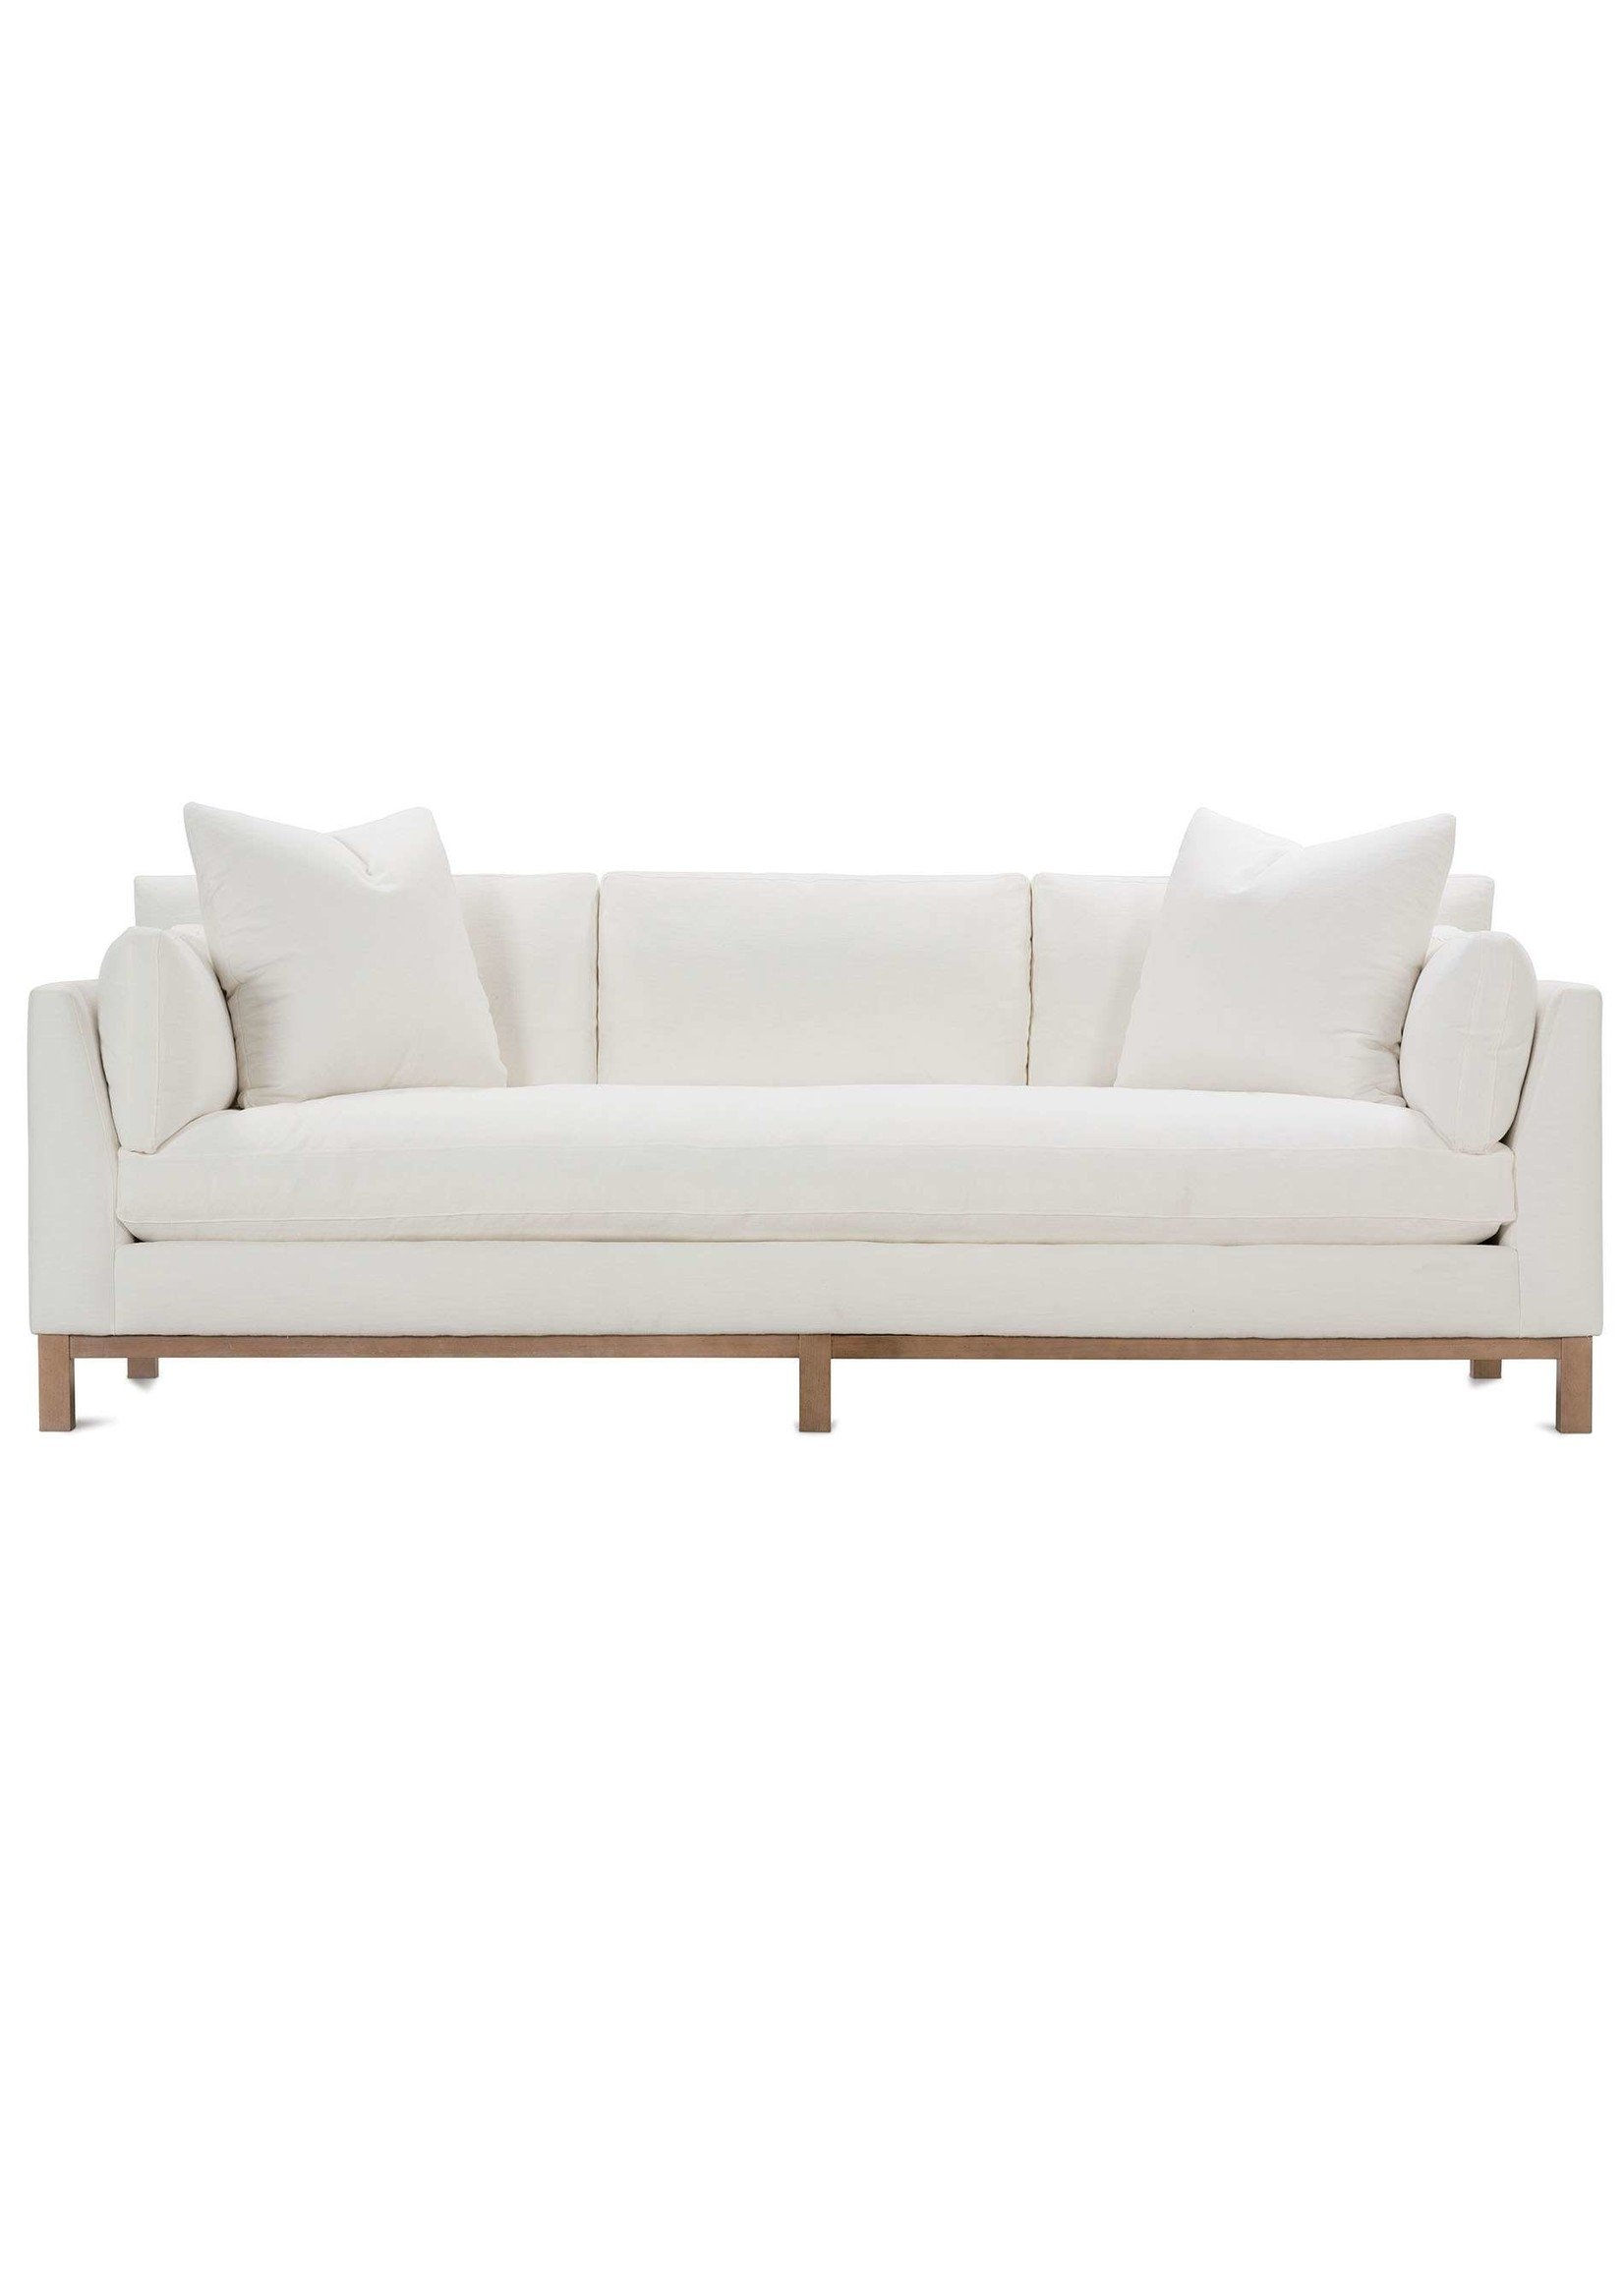 Rowe Furniture Boden Upholstered Sofa